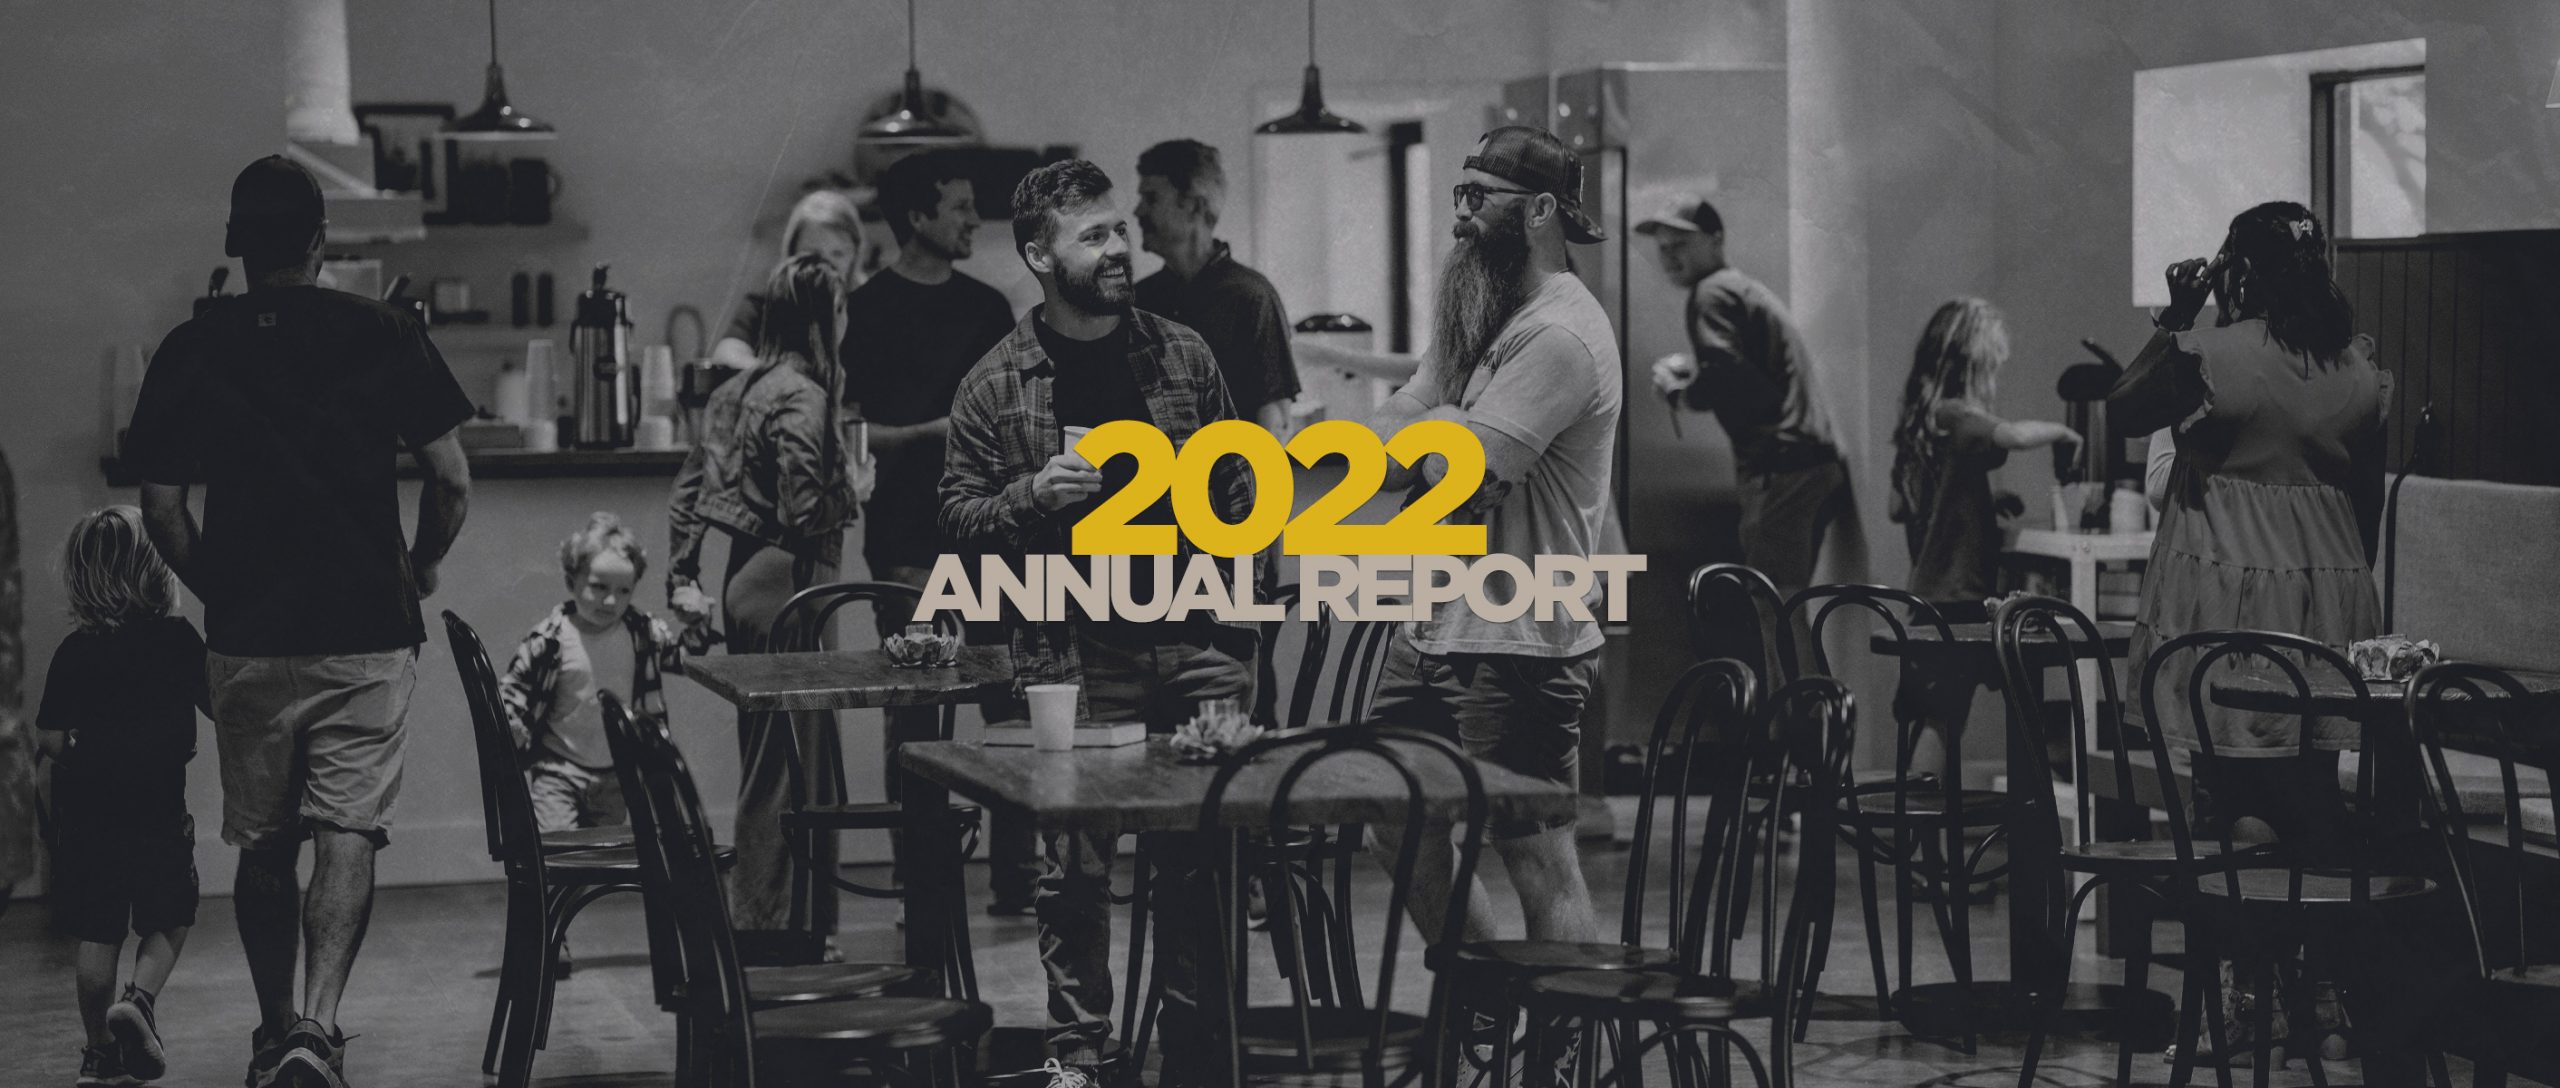 2022 Annual Report Slider